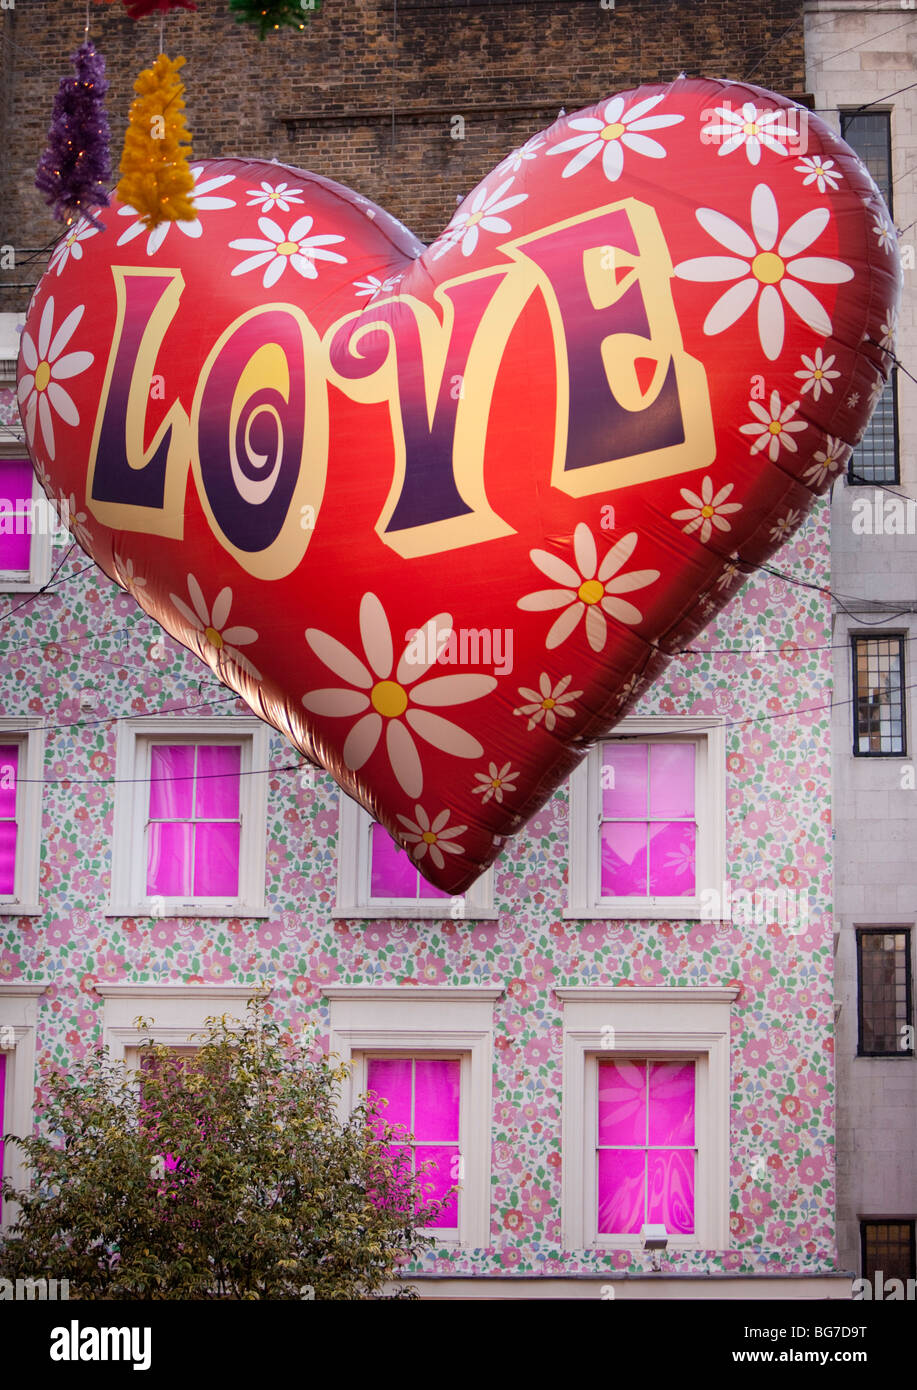 Love balloon géant, Londres, Angleterre Banque D'Images